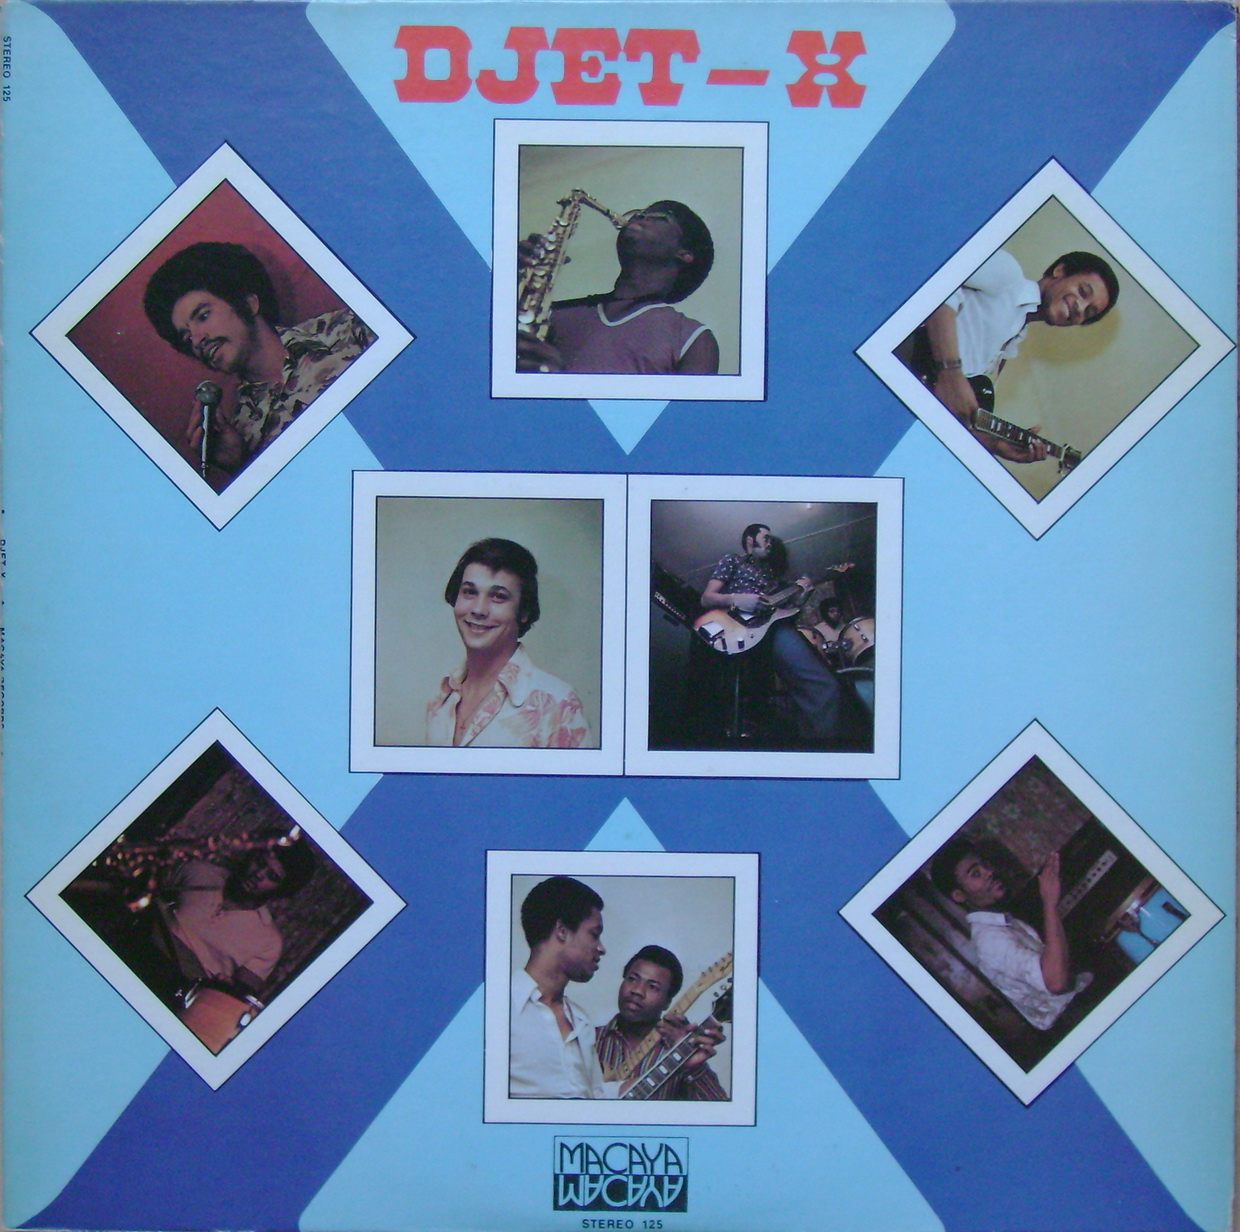  djet-x - djet-x (1975)  Macaya+125